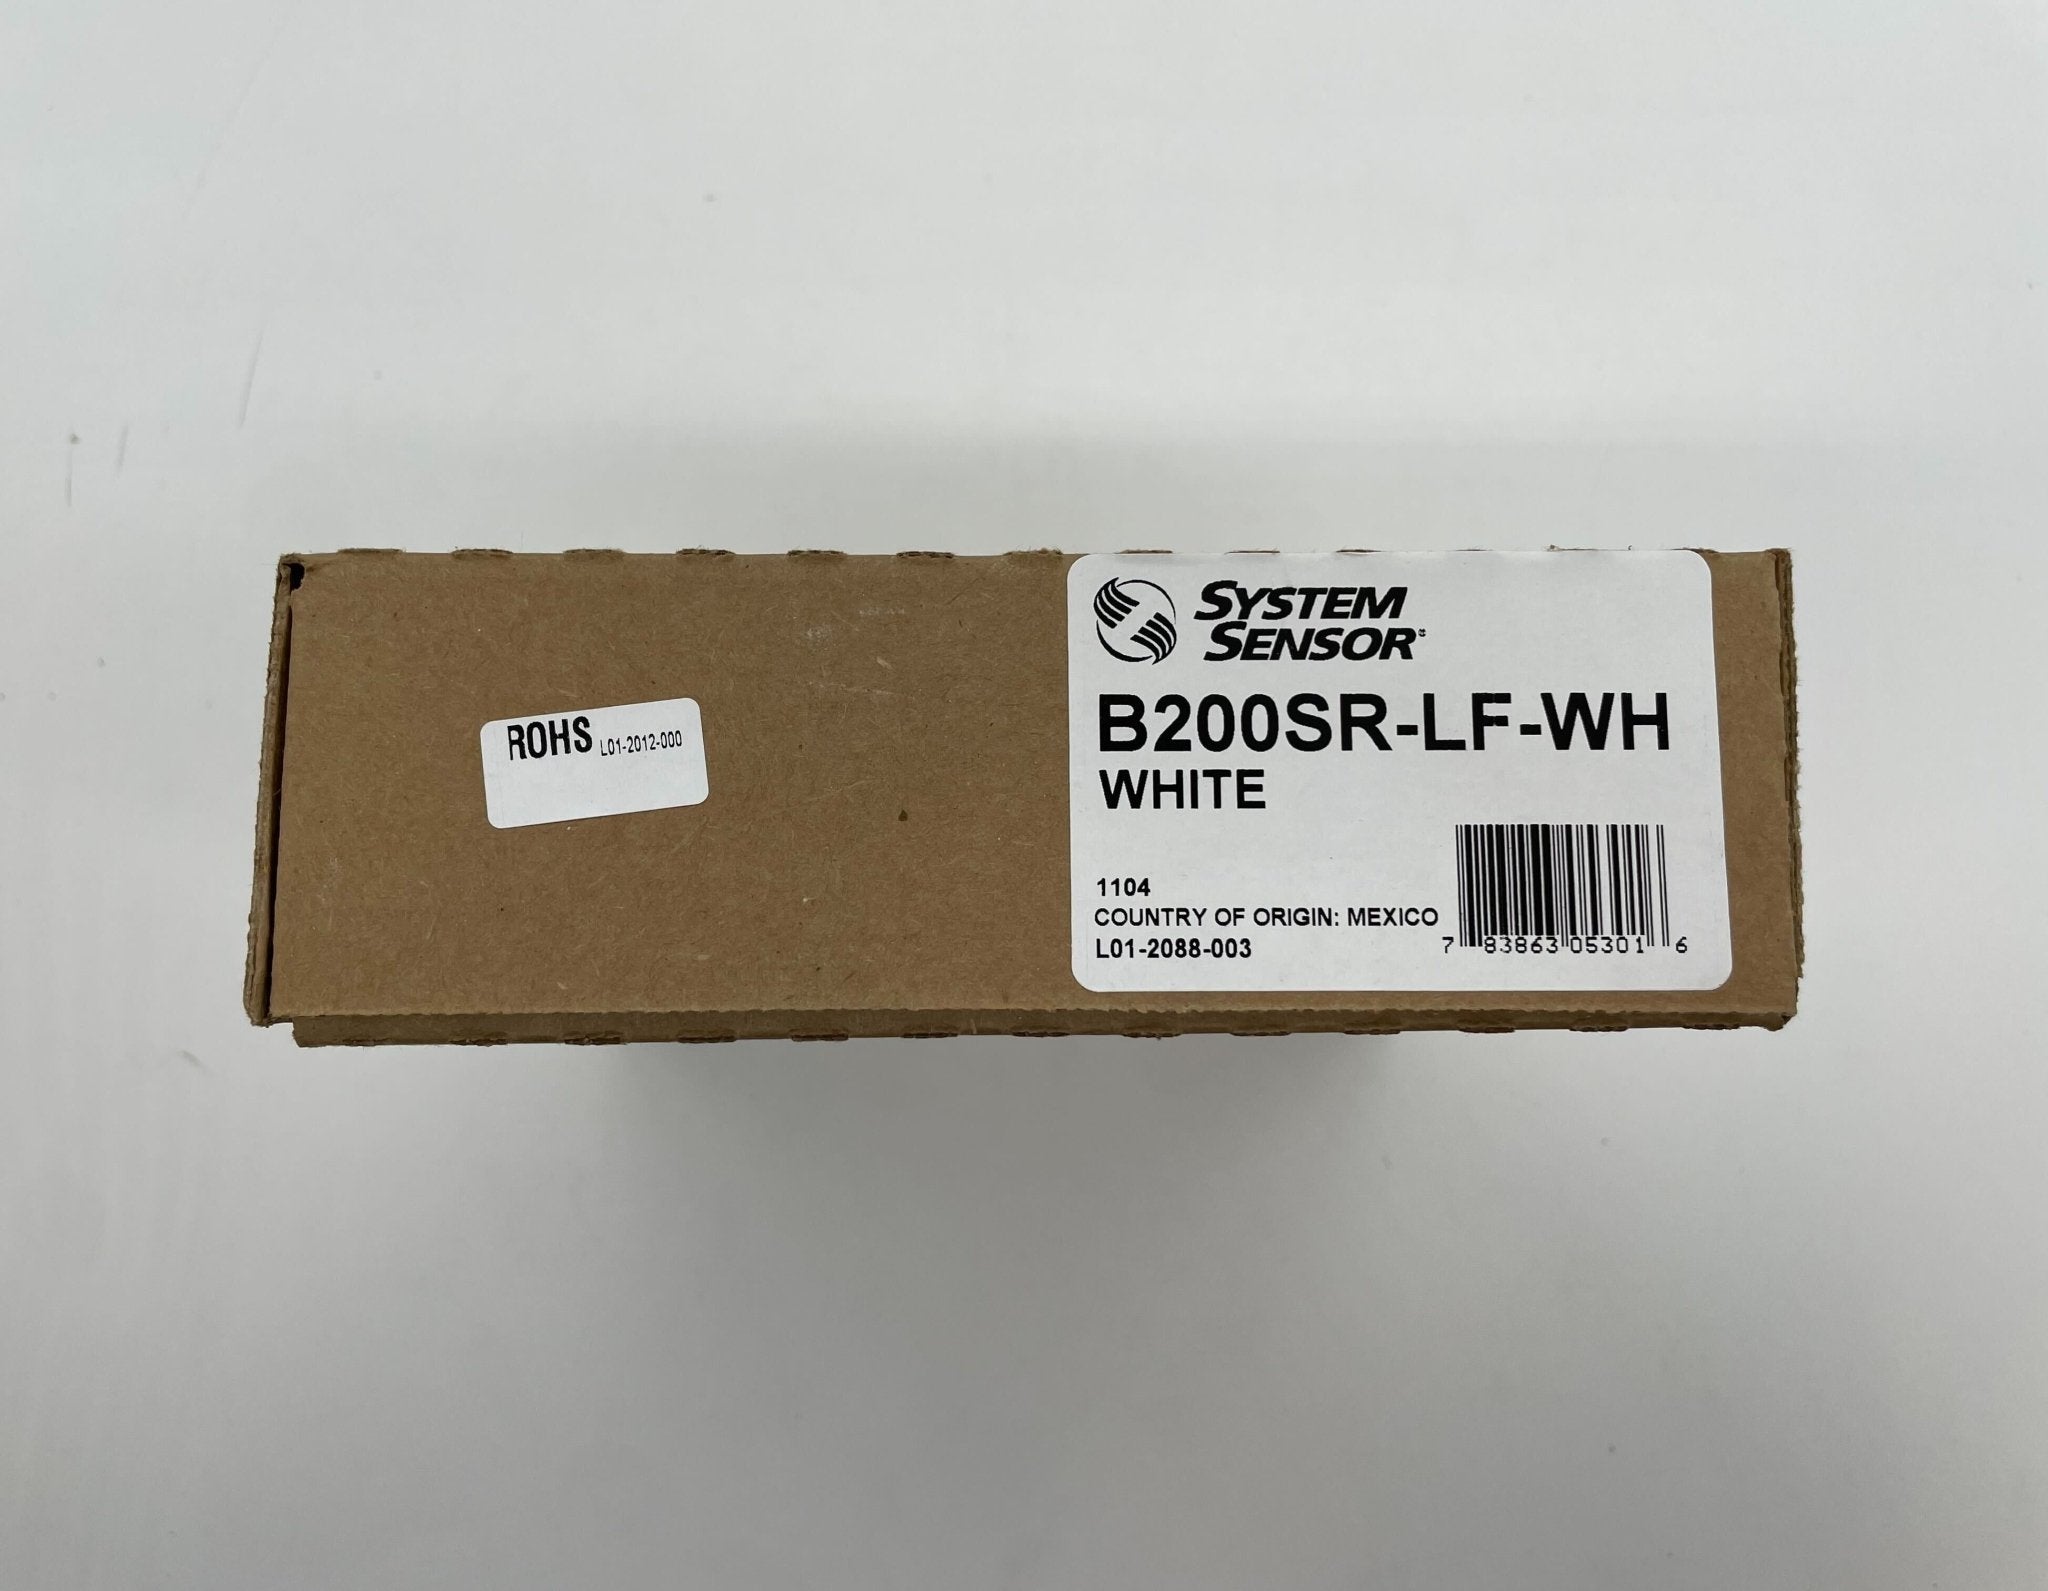 System Sensor B200SR-LF-WH - The Fire Alarm Supplier